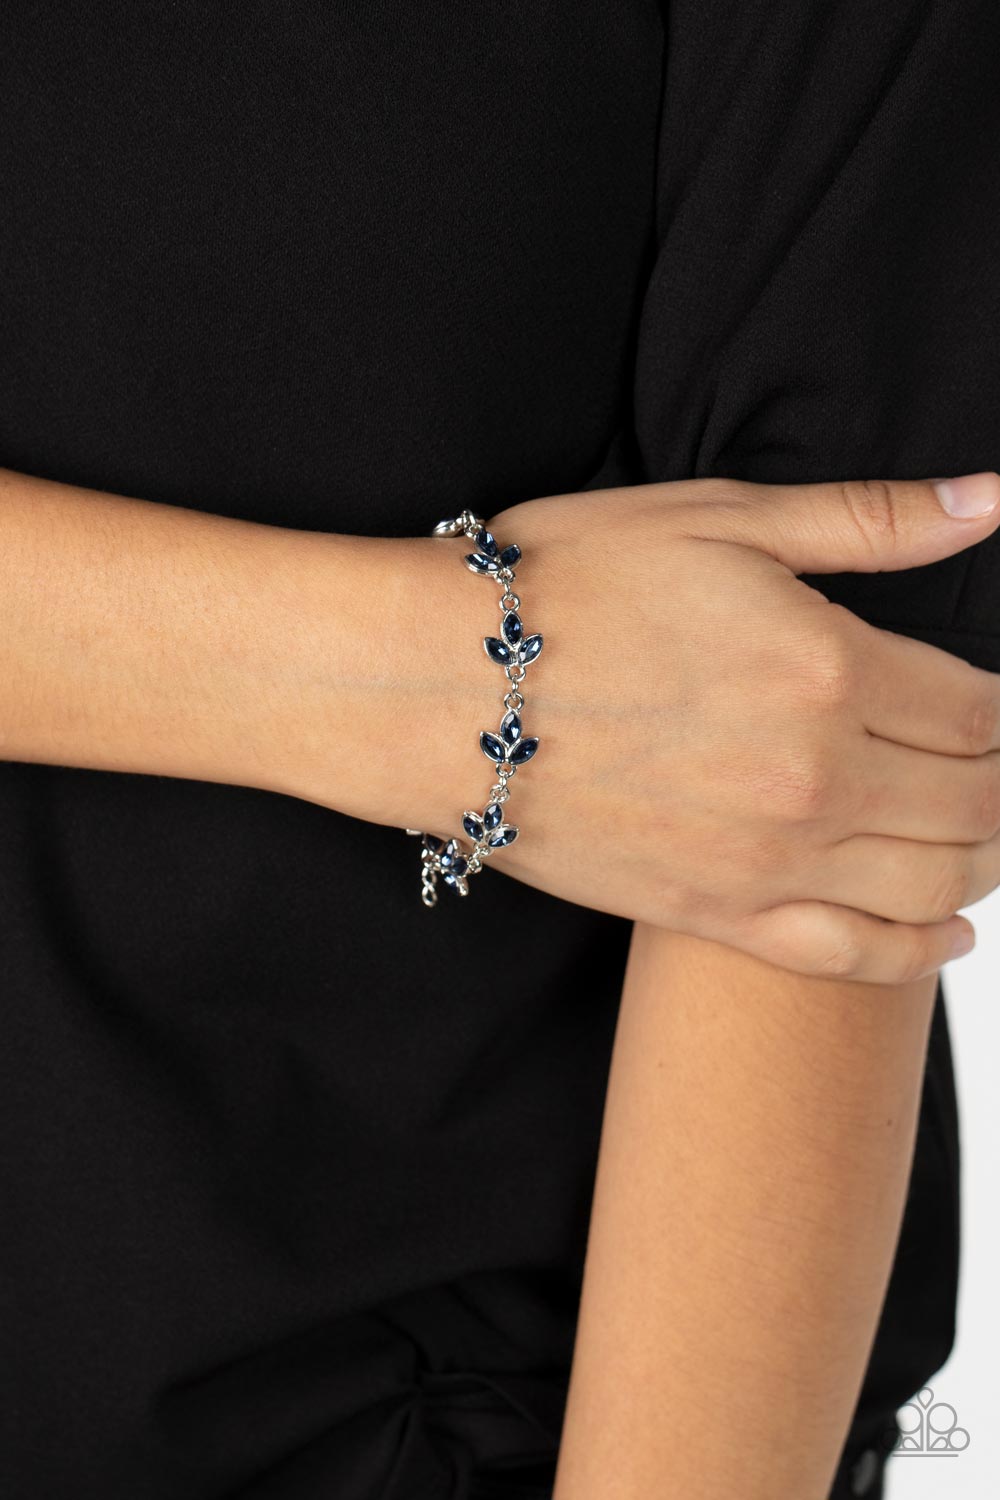 Gala Garland Blue Rhinestone Bracelet - Paparazzi Accessories- on model - CarasShop.com - $5 Jewelry by Cara Jewels